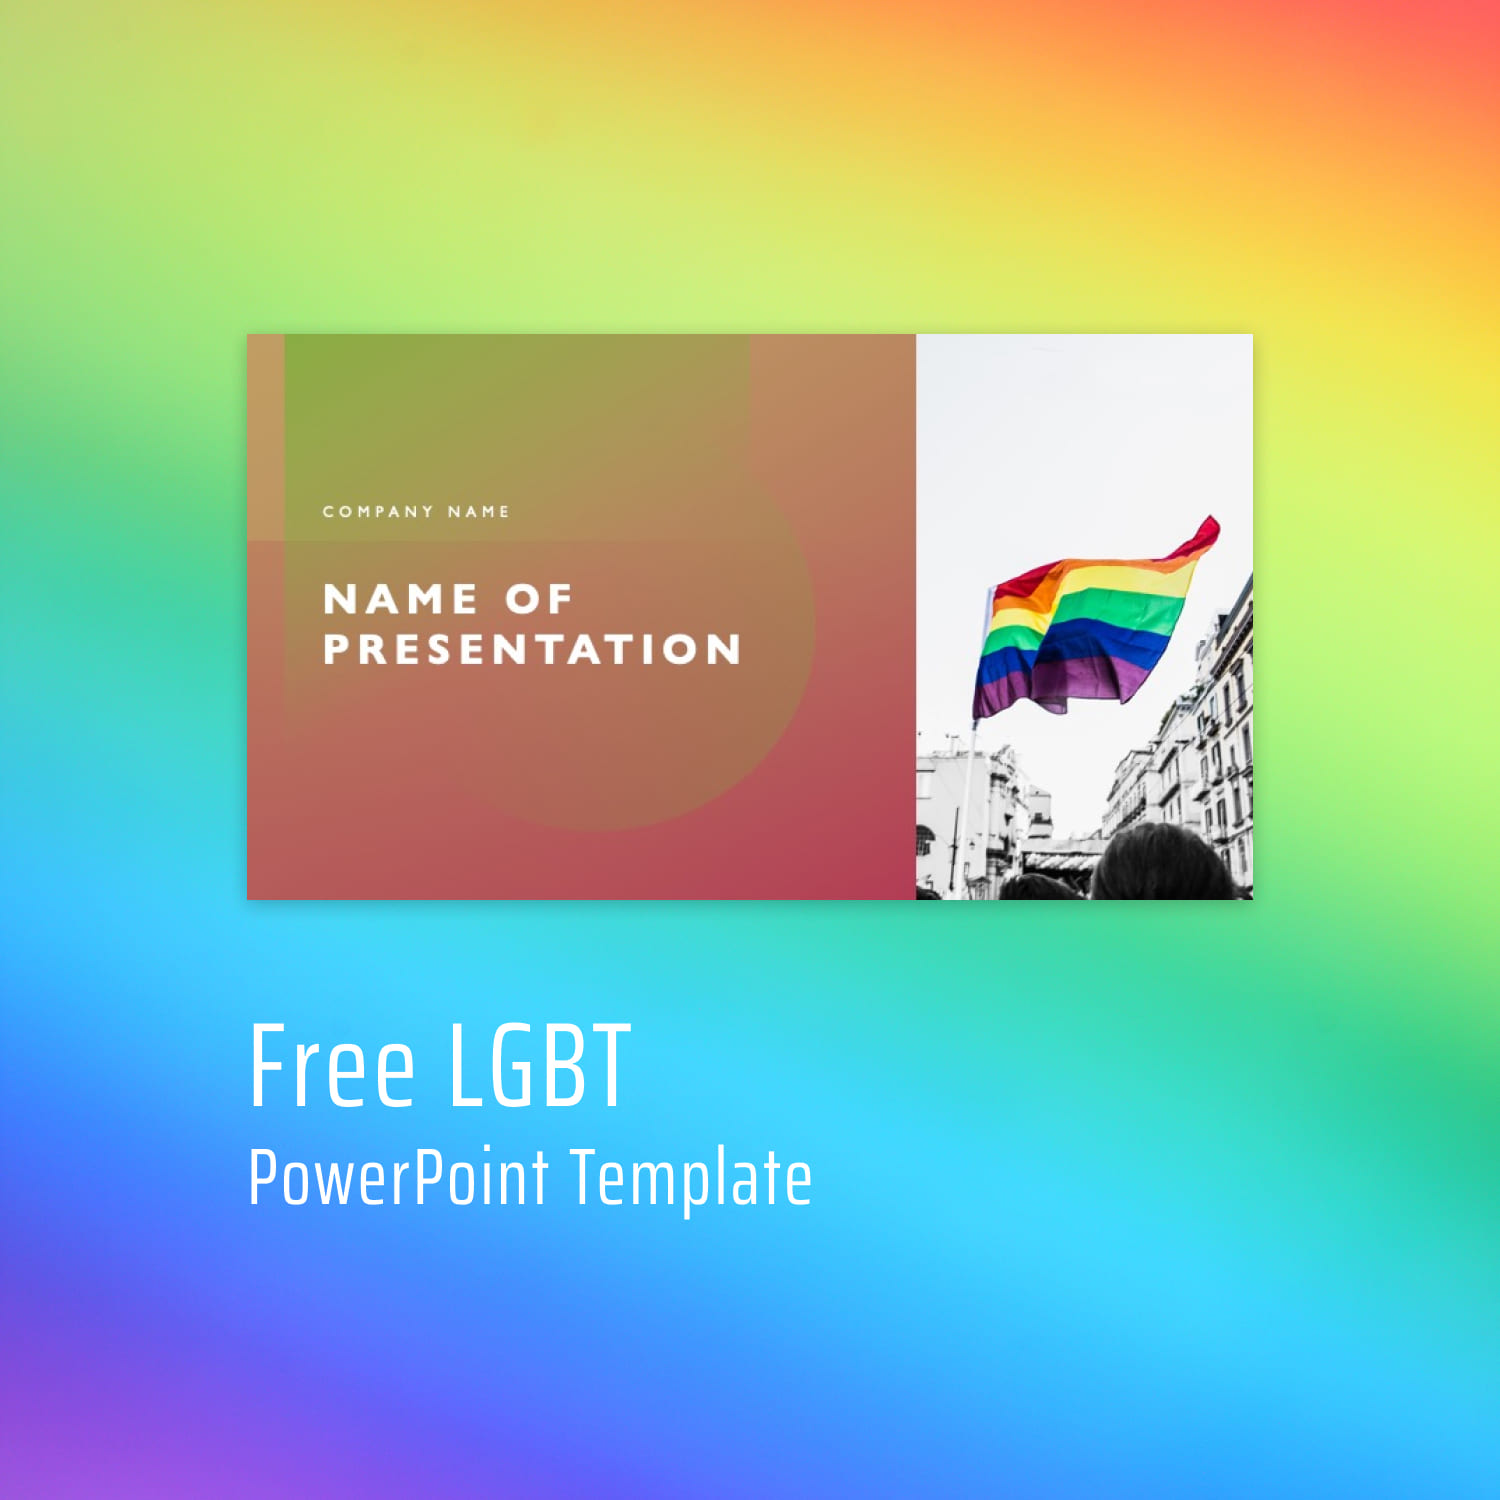 powerpoint presentation on lgbtq